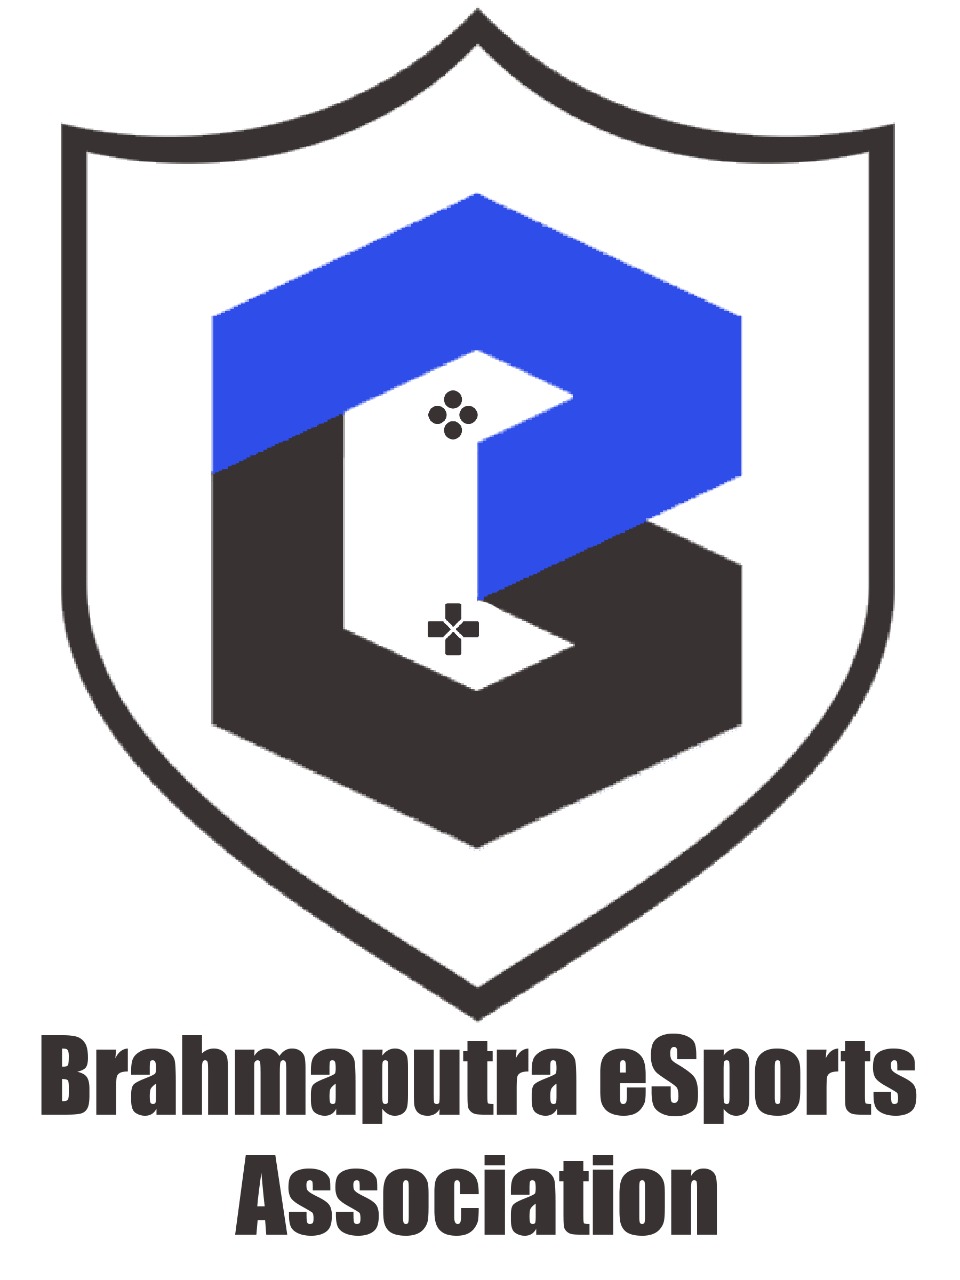 Brahmaputra Esports Association